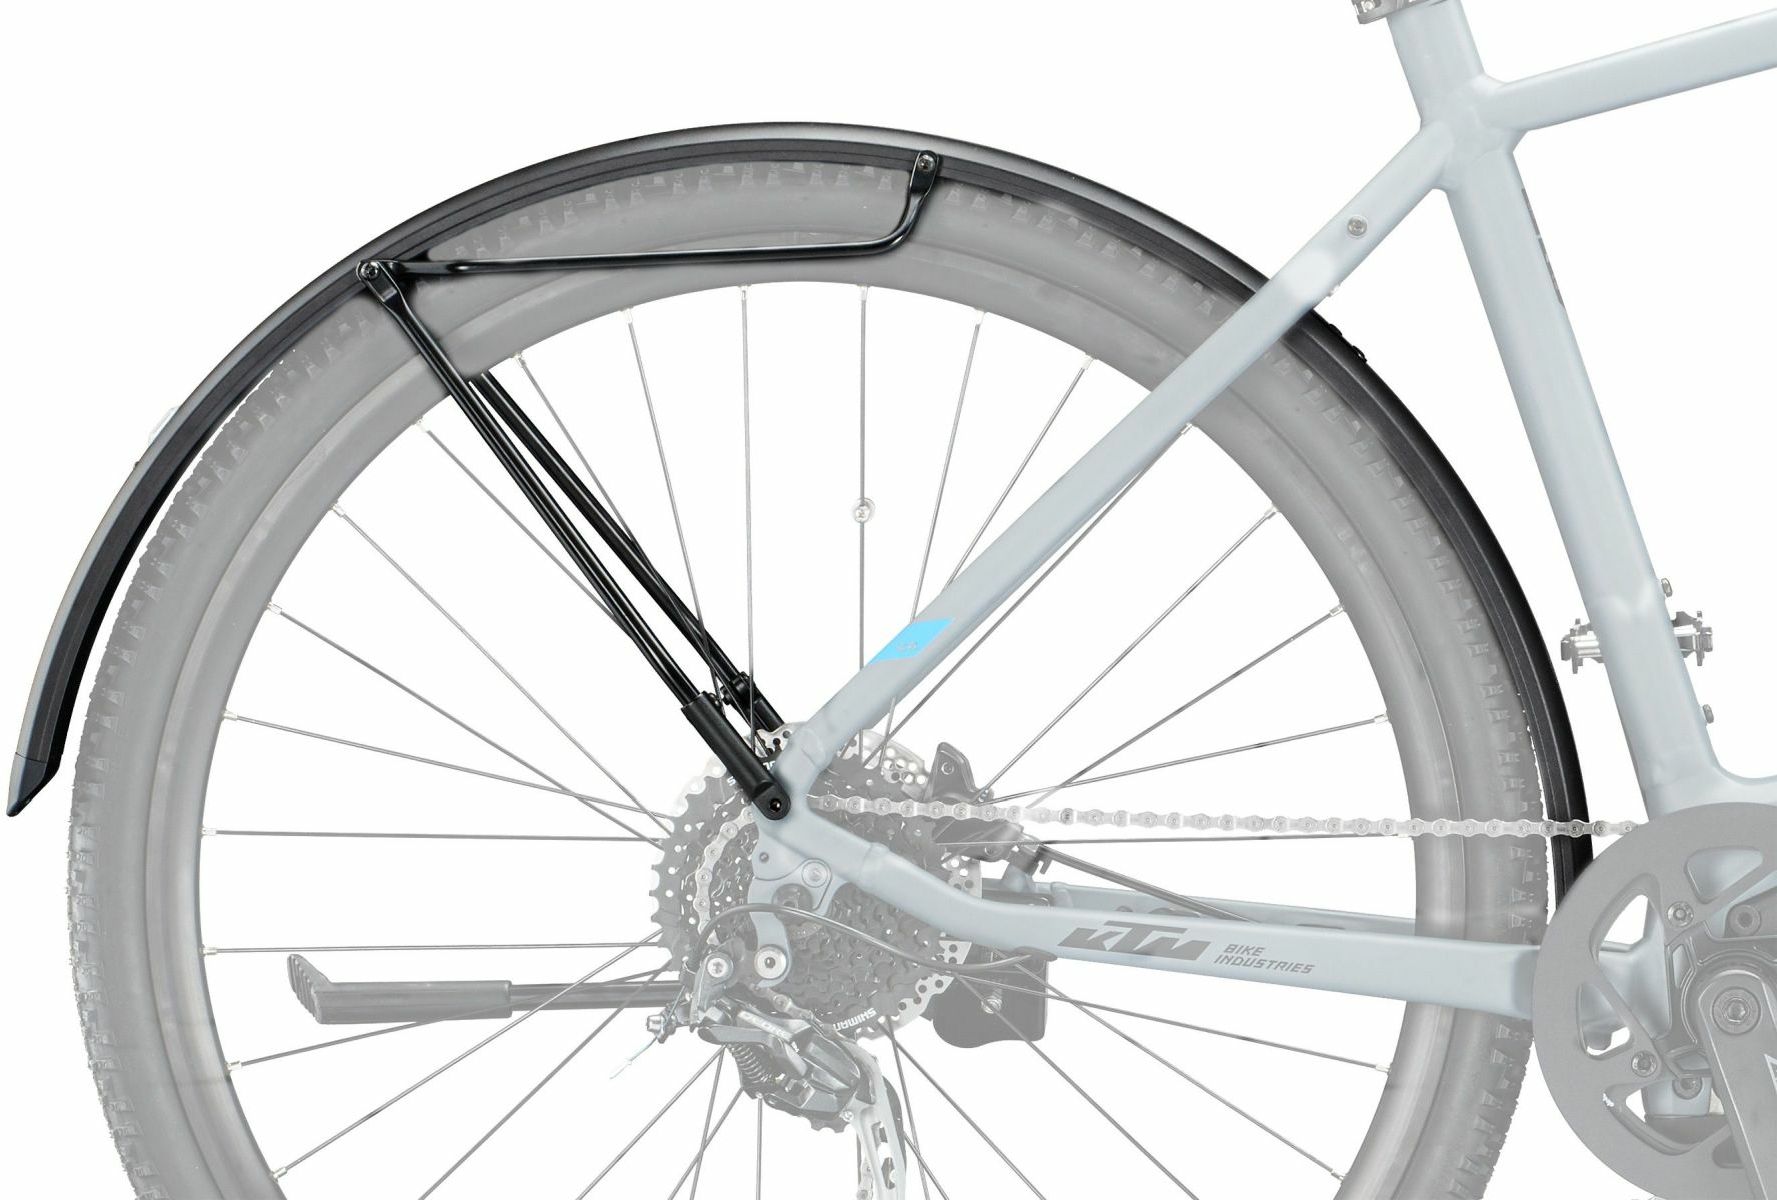 KTM Schutzbleche Macina Race 27 Zoll Modell 2020 E-Bike Schutzbleche hinten mit Rail und integriertem Licht